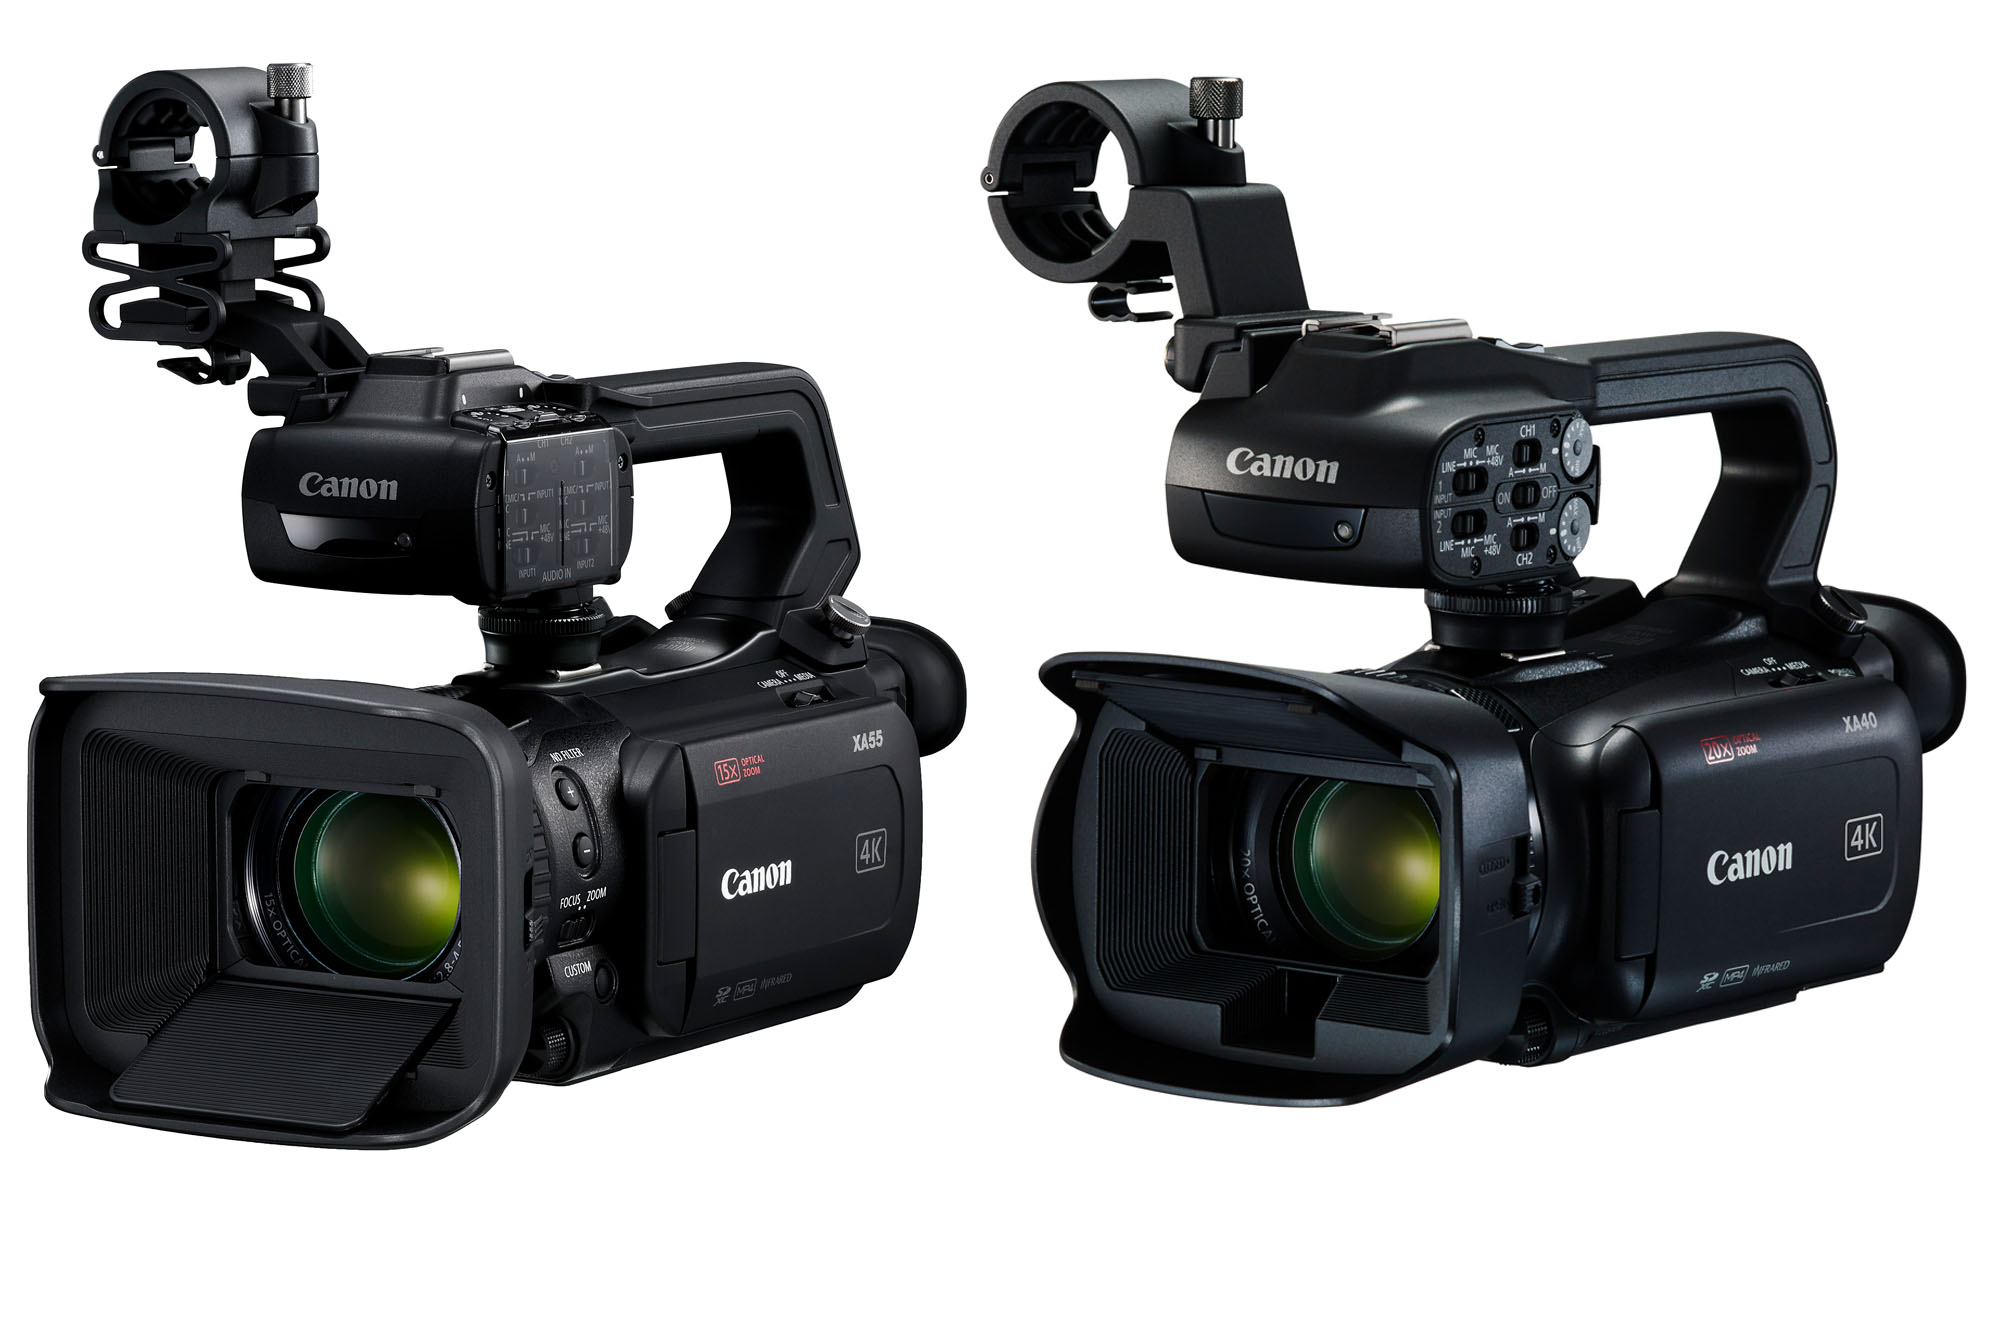 Canon XA40 ビデオカメラ光学20倍